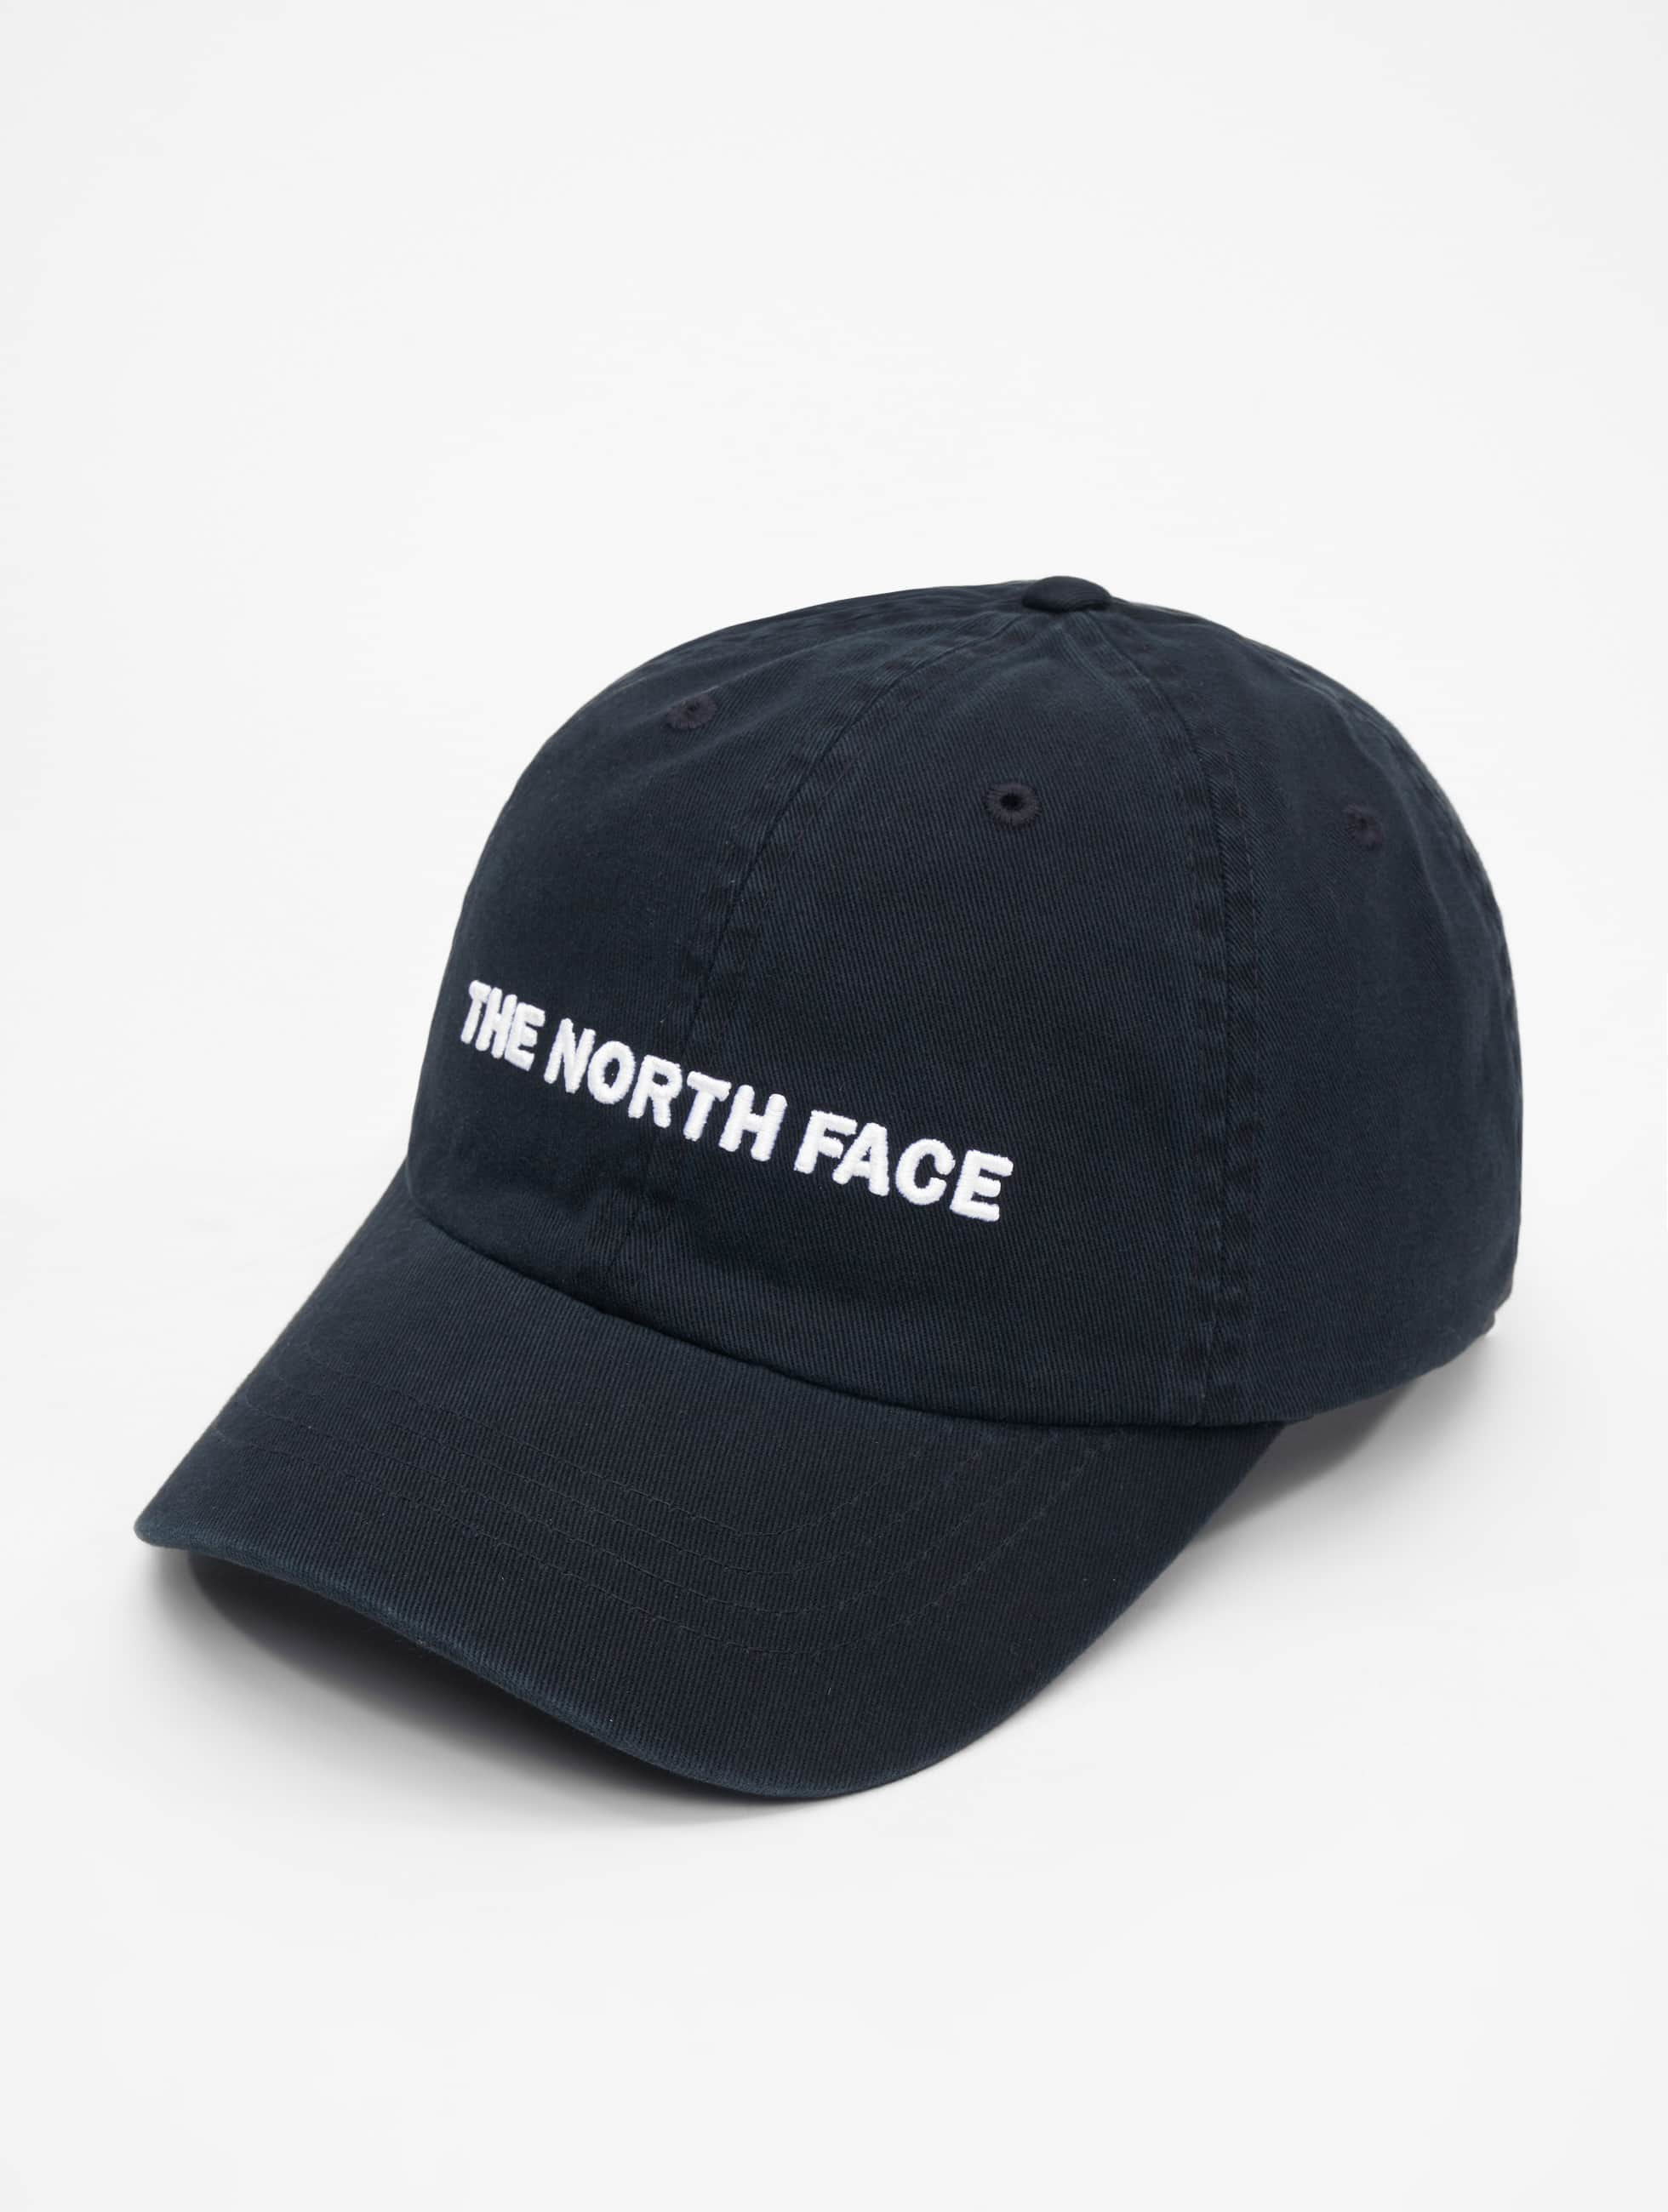 The North Face Snapback Cap Horizontal Embro in schwarz 1039445